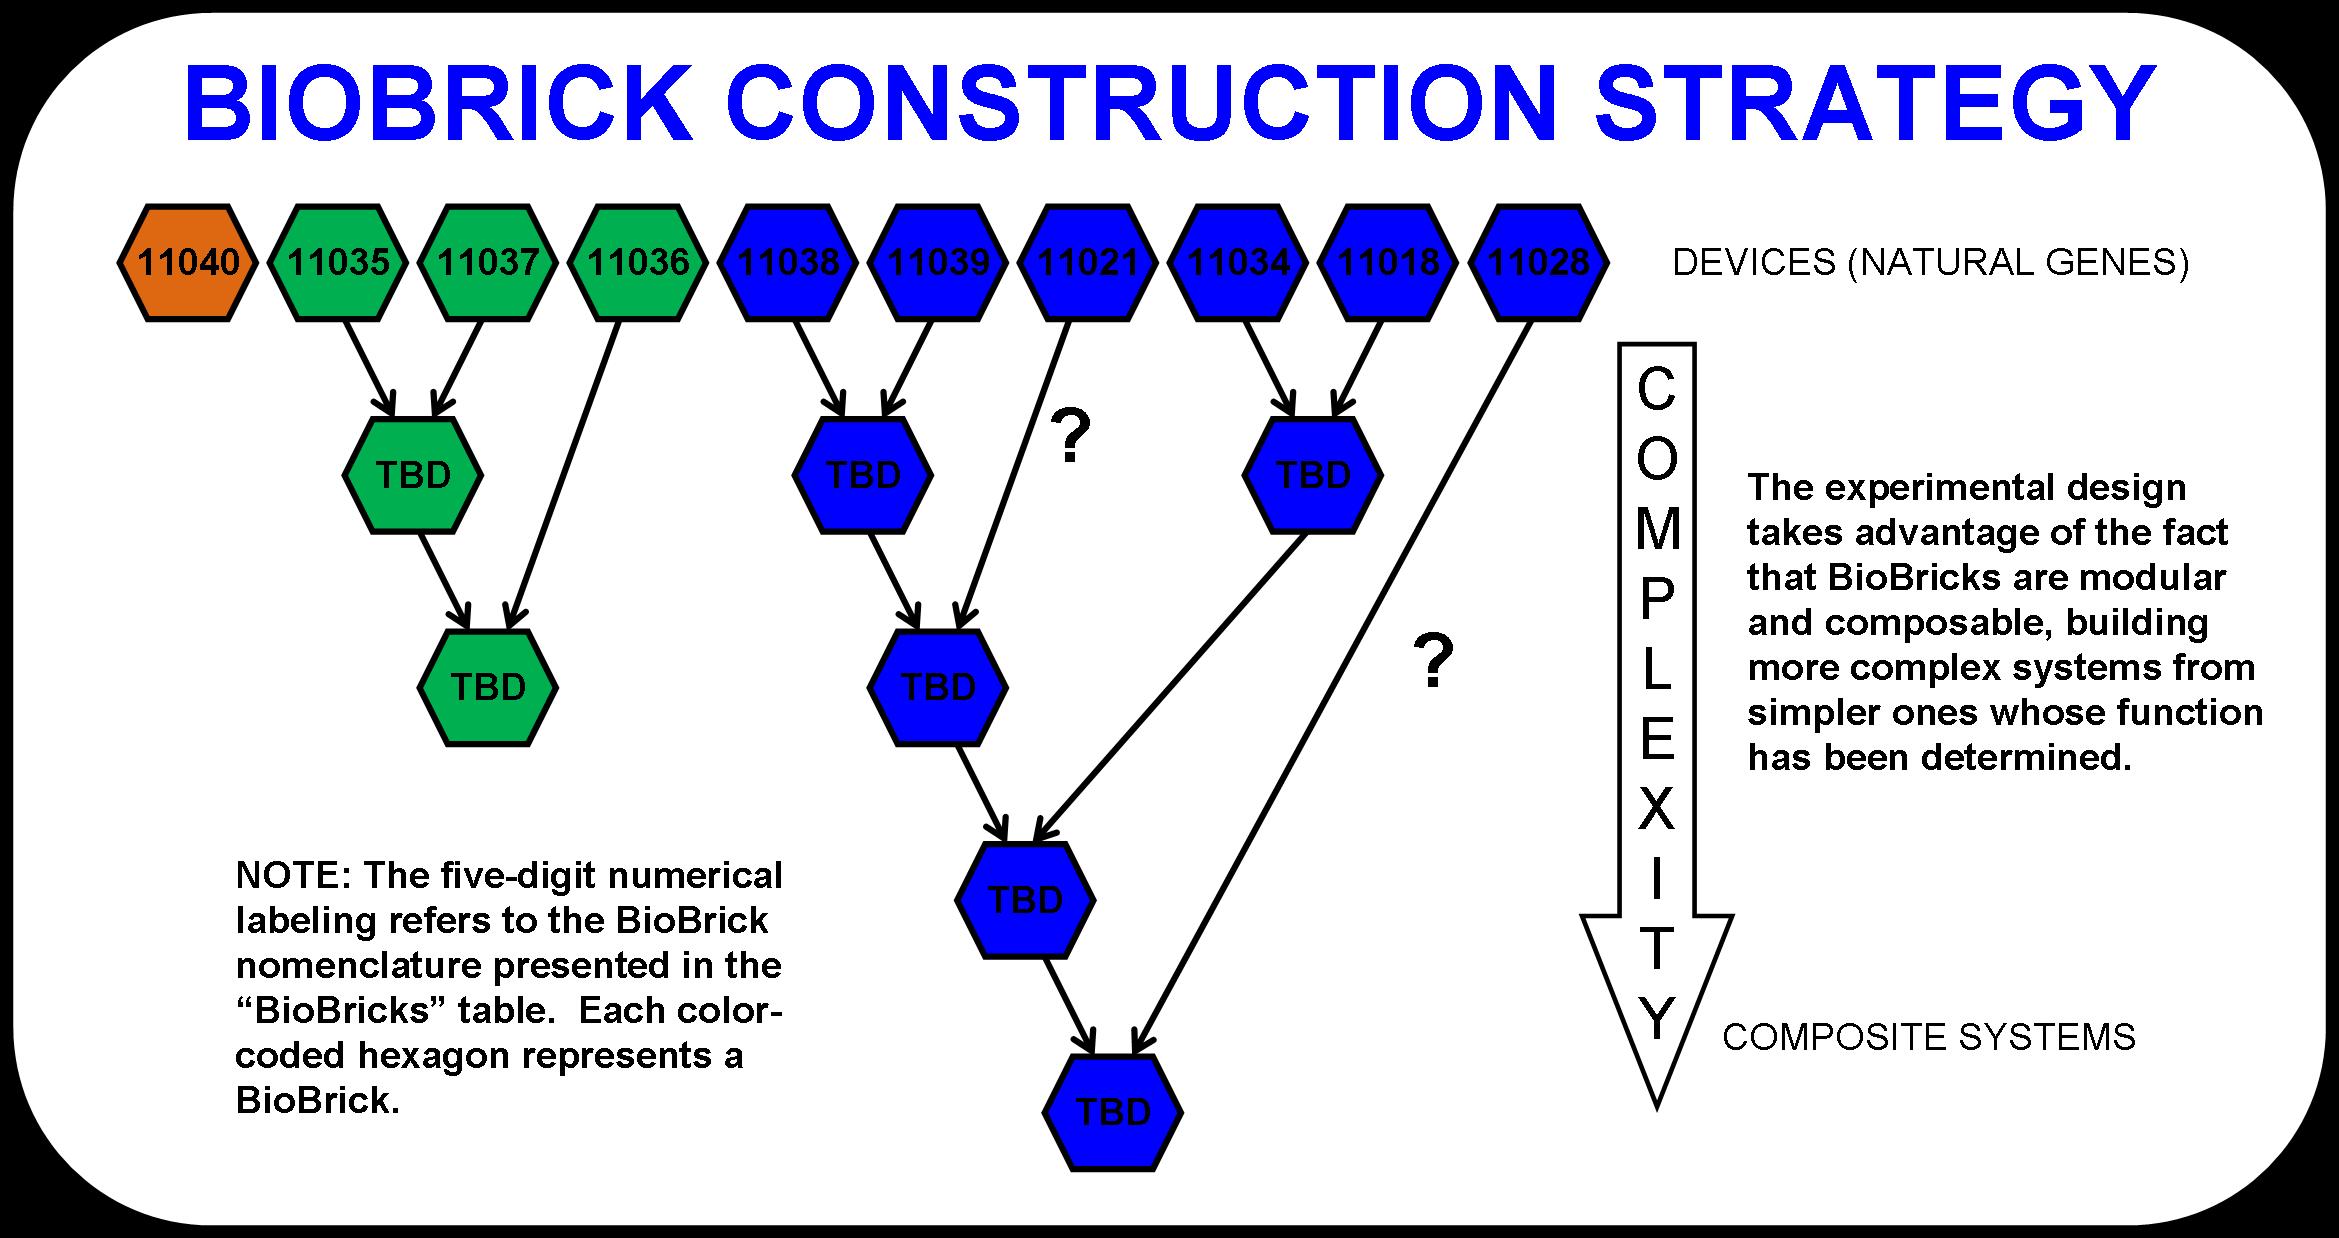 VGEM 2007 biobrick construction strategy.jpg